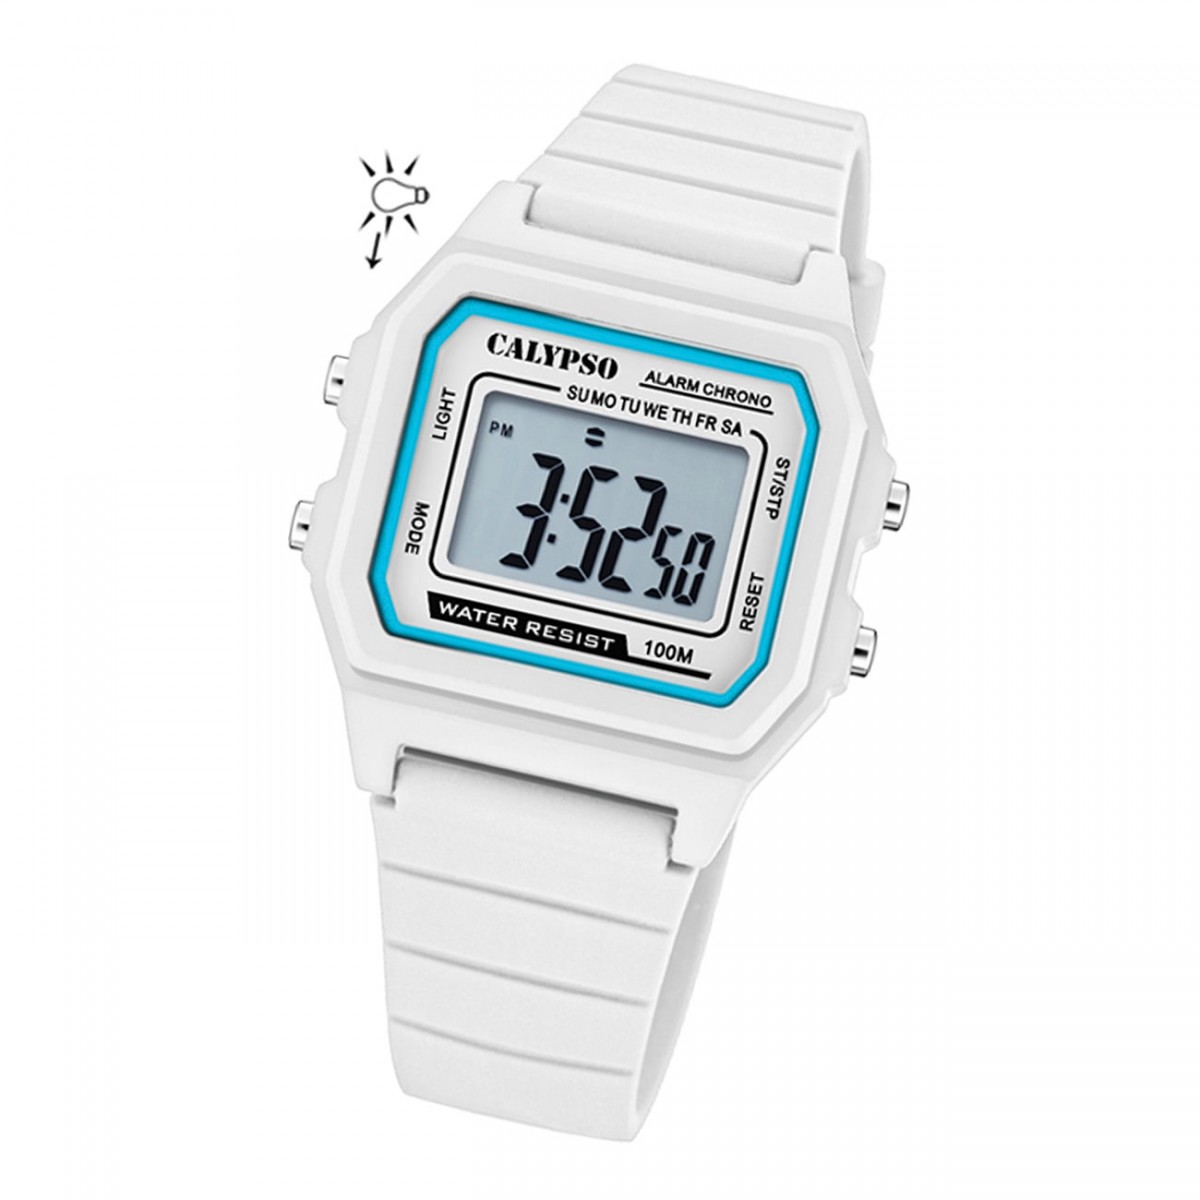 Armbanduhr Herren Sport K5805/1 Digital Calypso Kunststoff UK5805/1 weiß